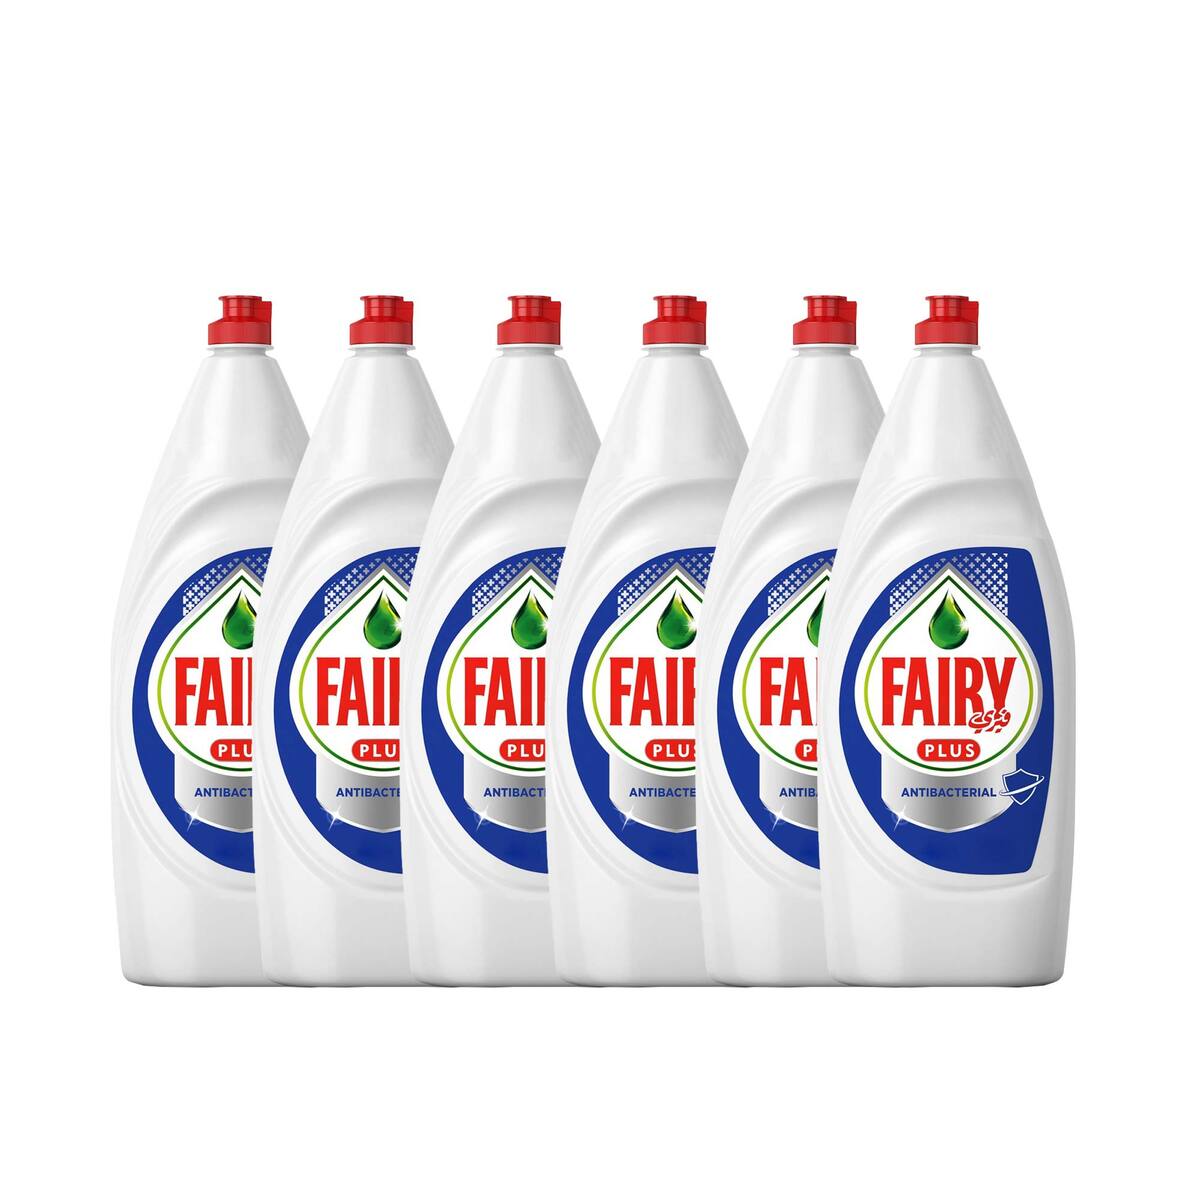 Fairy Plus Dishwashing Liquid Soap  Antibacterial  Value Pack 6 x 600ml